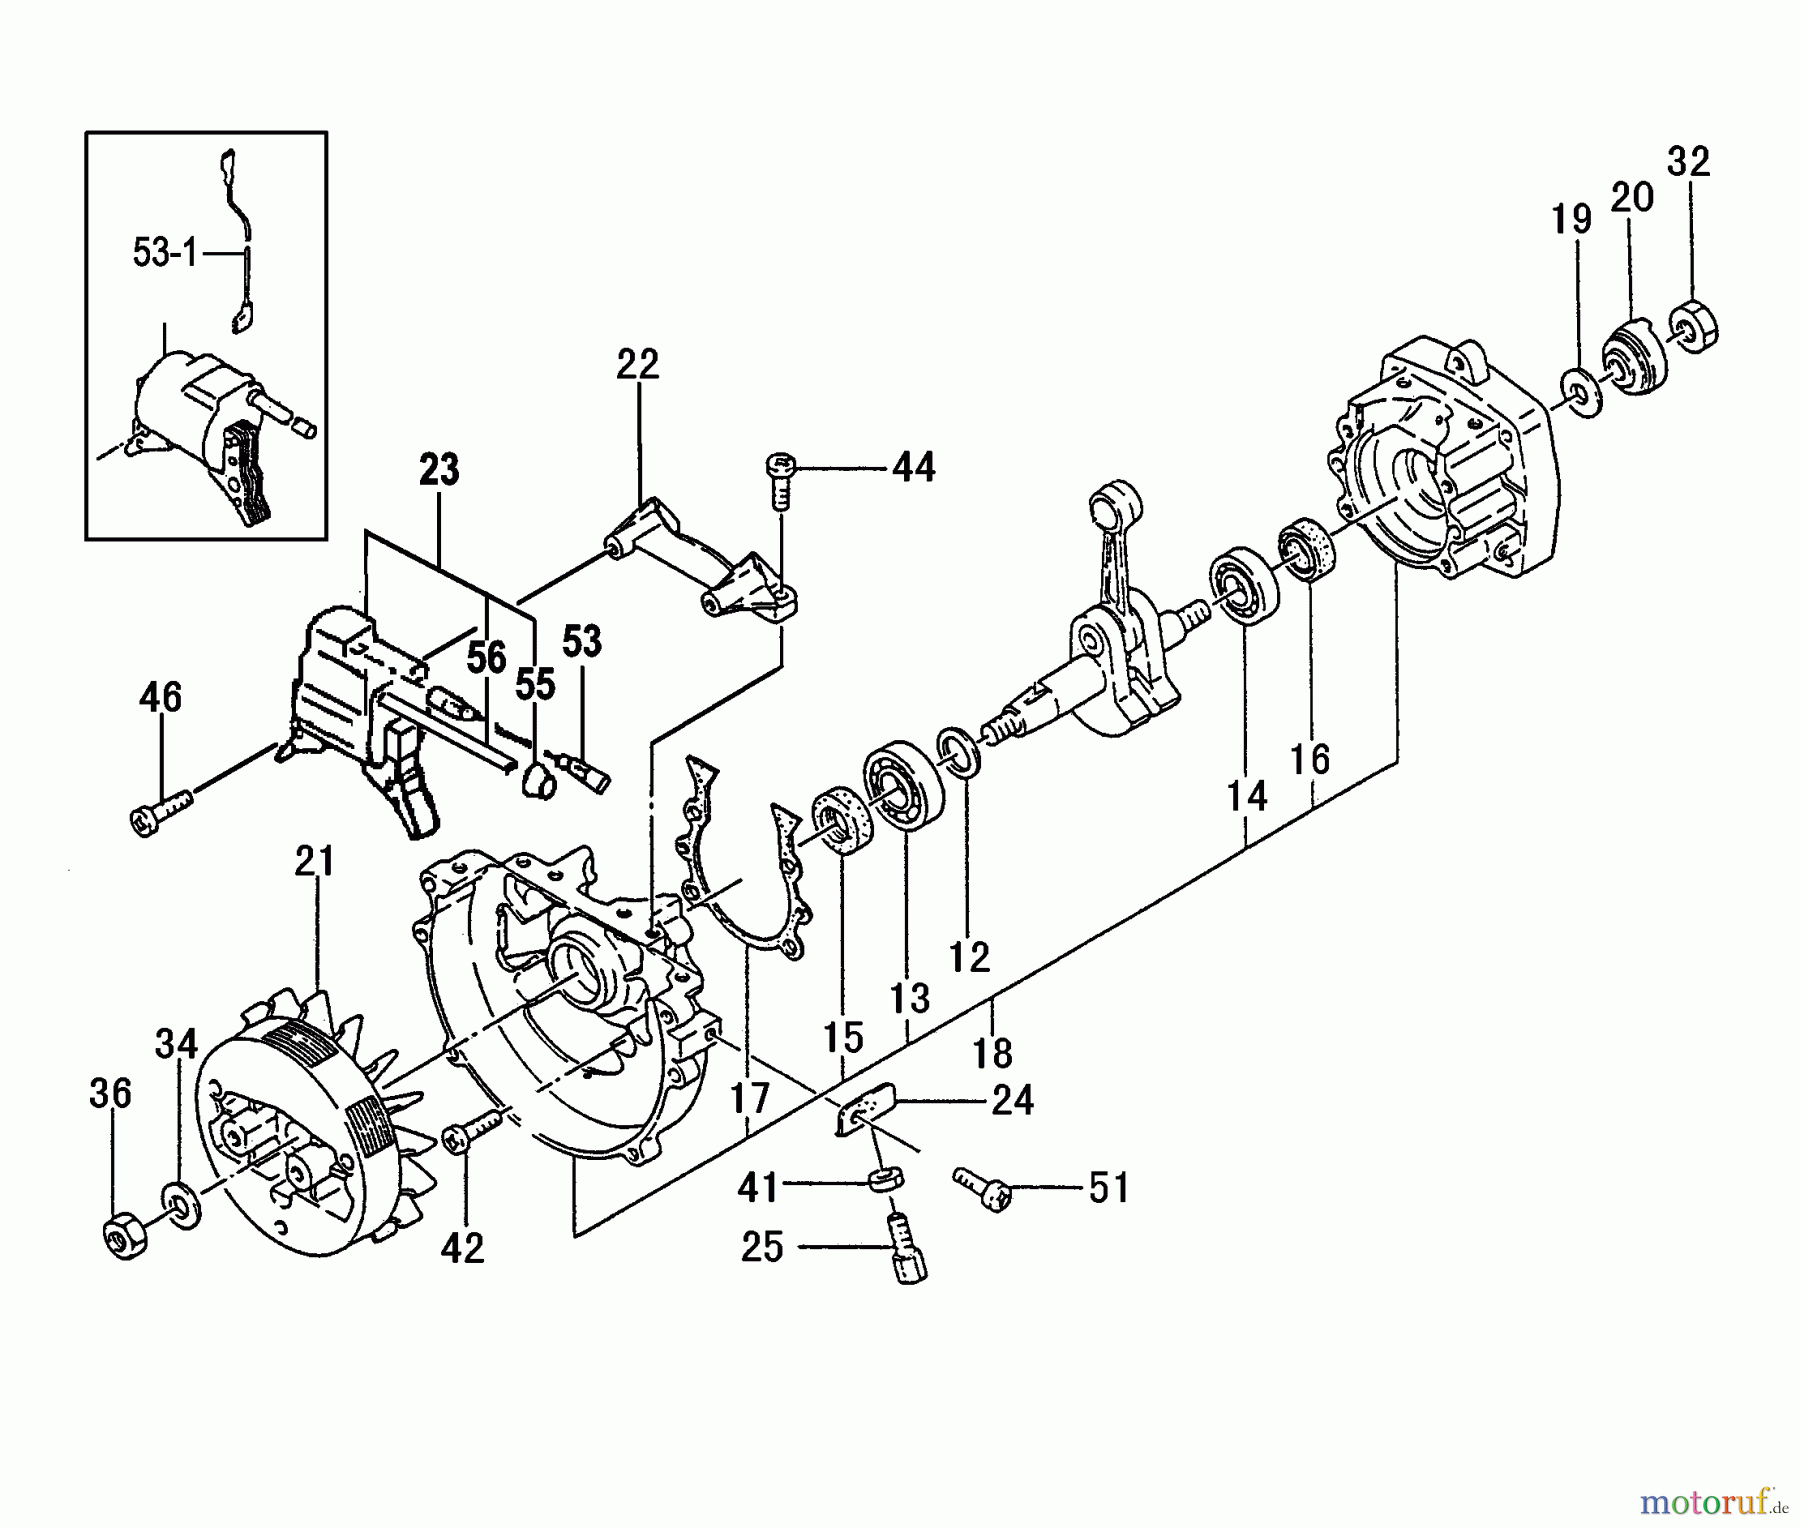  Tanaka Erdbohrer TED-262R - Tanaka Engine Drill W/Reverse Crankcase, Flywheel, Ignition